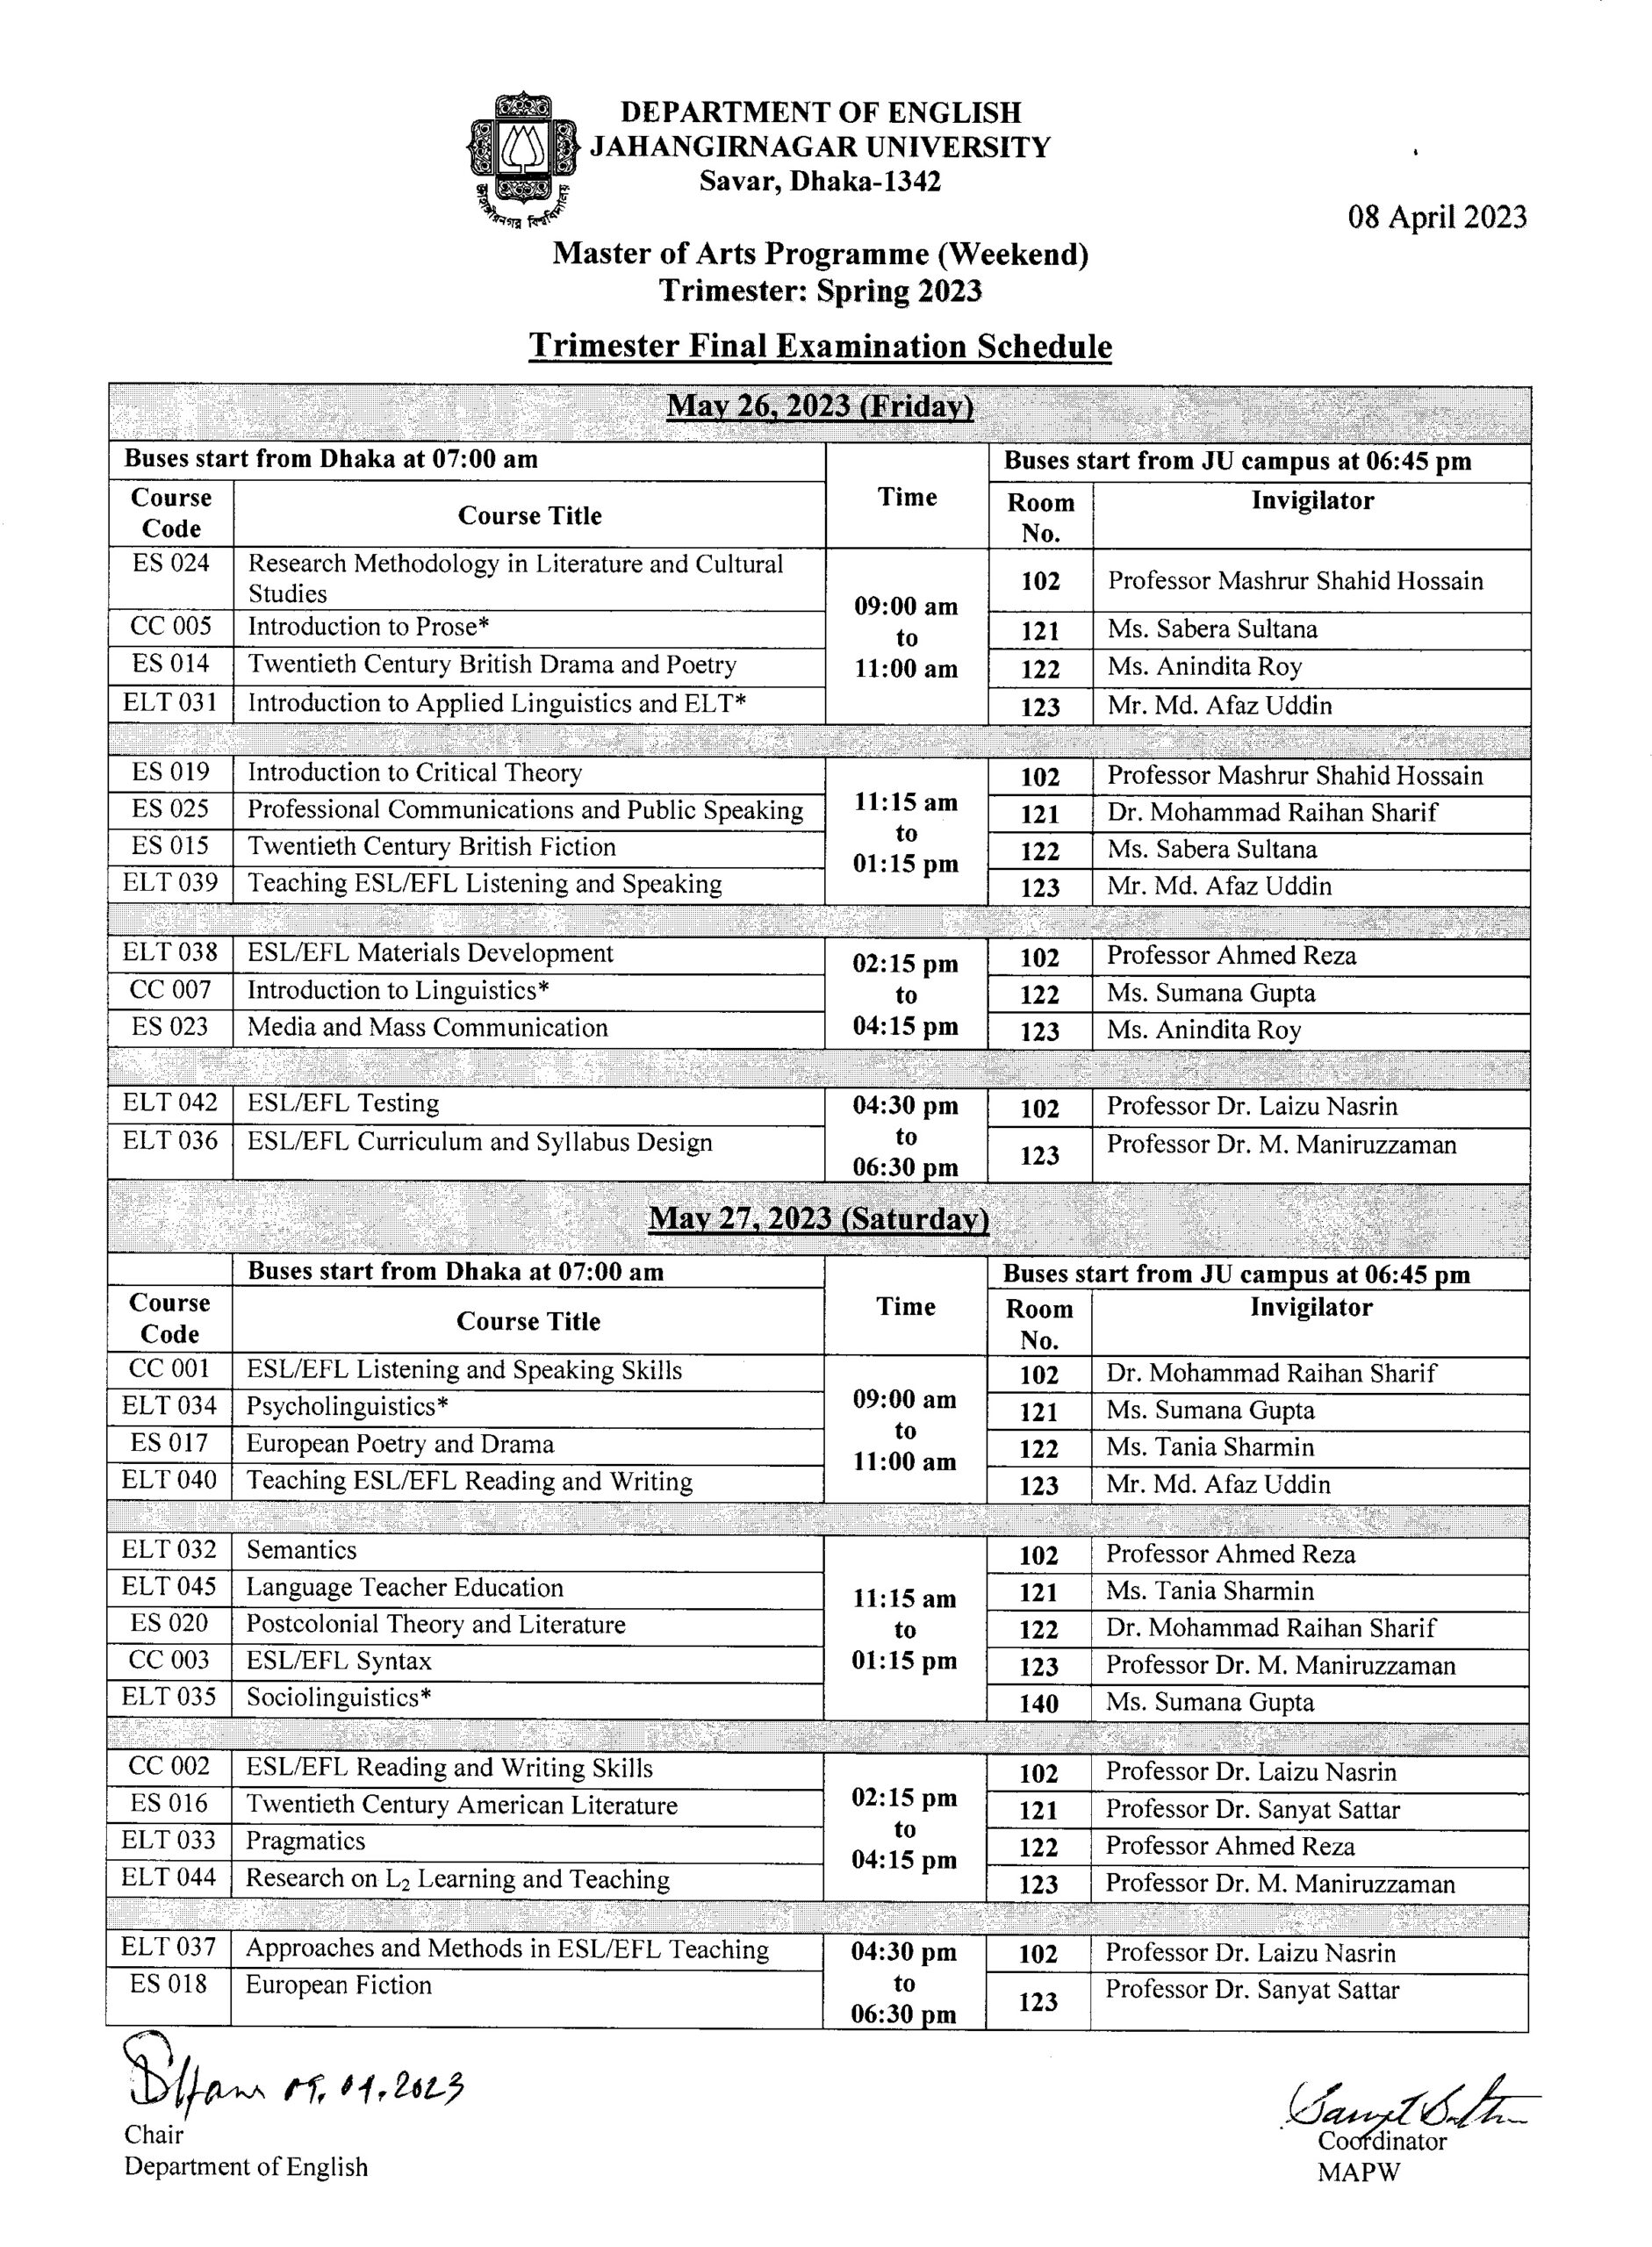 Trimester Final Examination Schedule: Spring 2023 – Department of English Jahangirnagar University